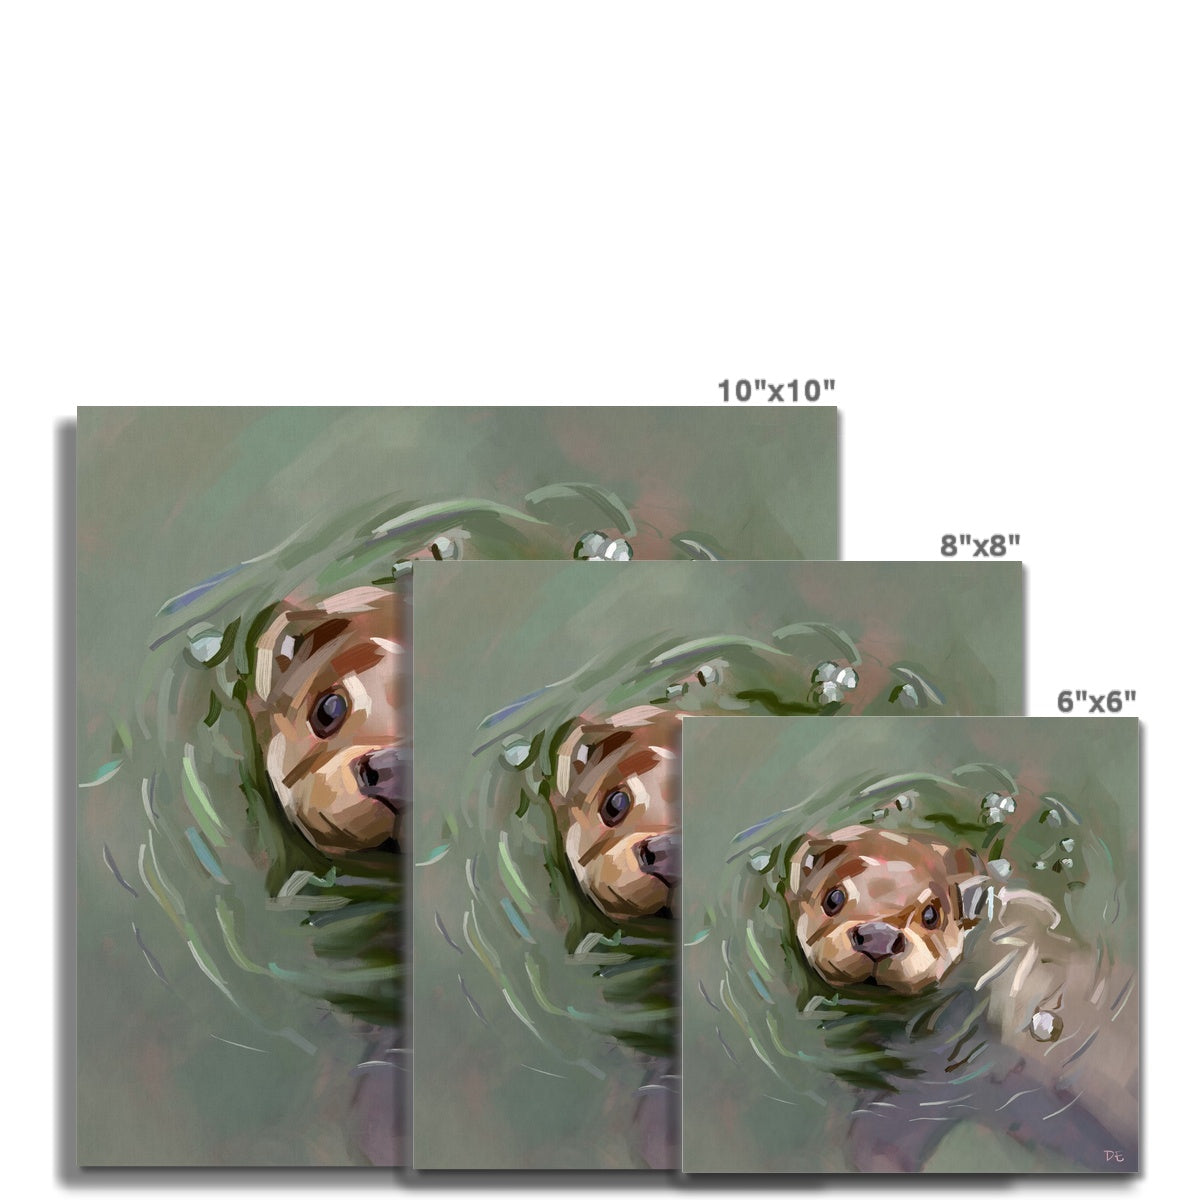 Otter - Animal Print by PixelEde